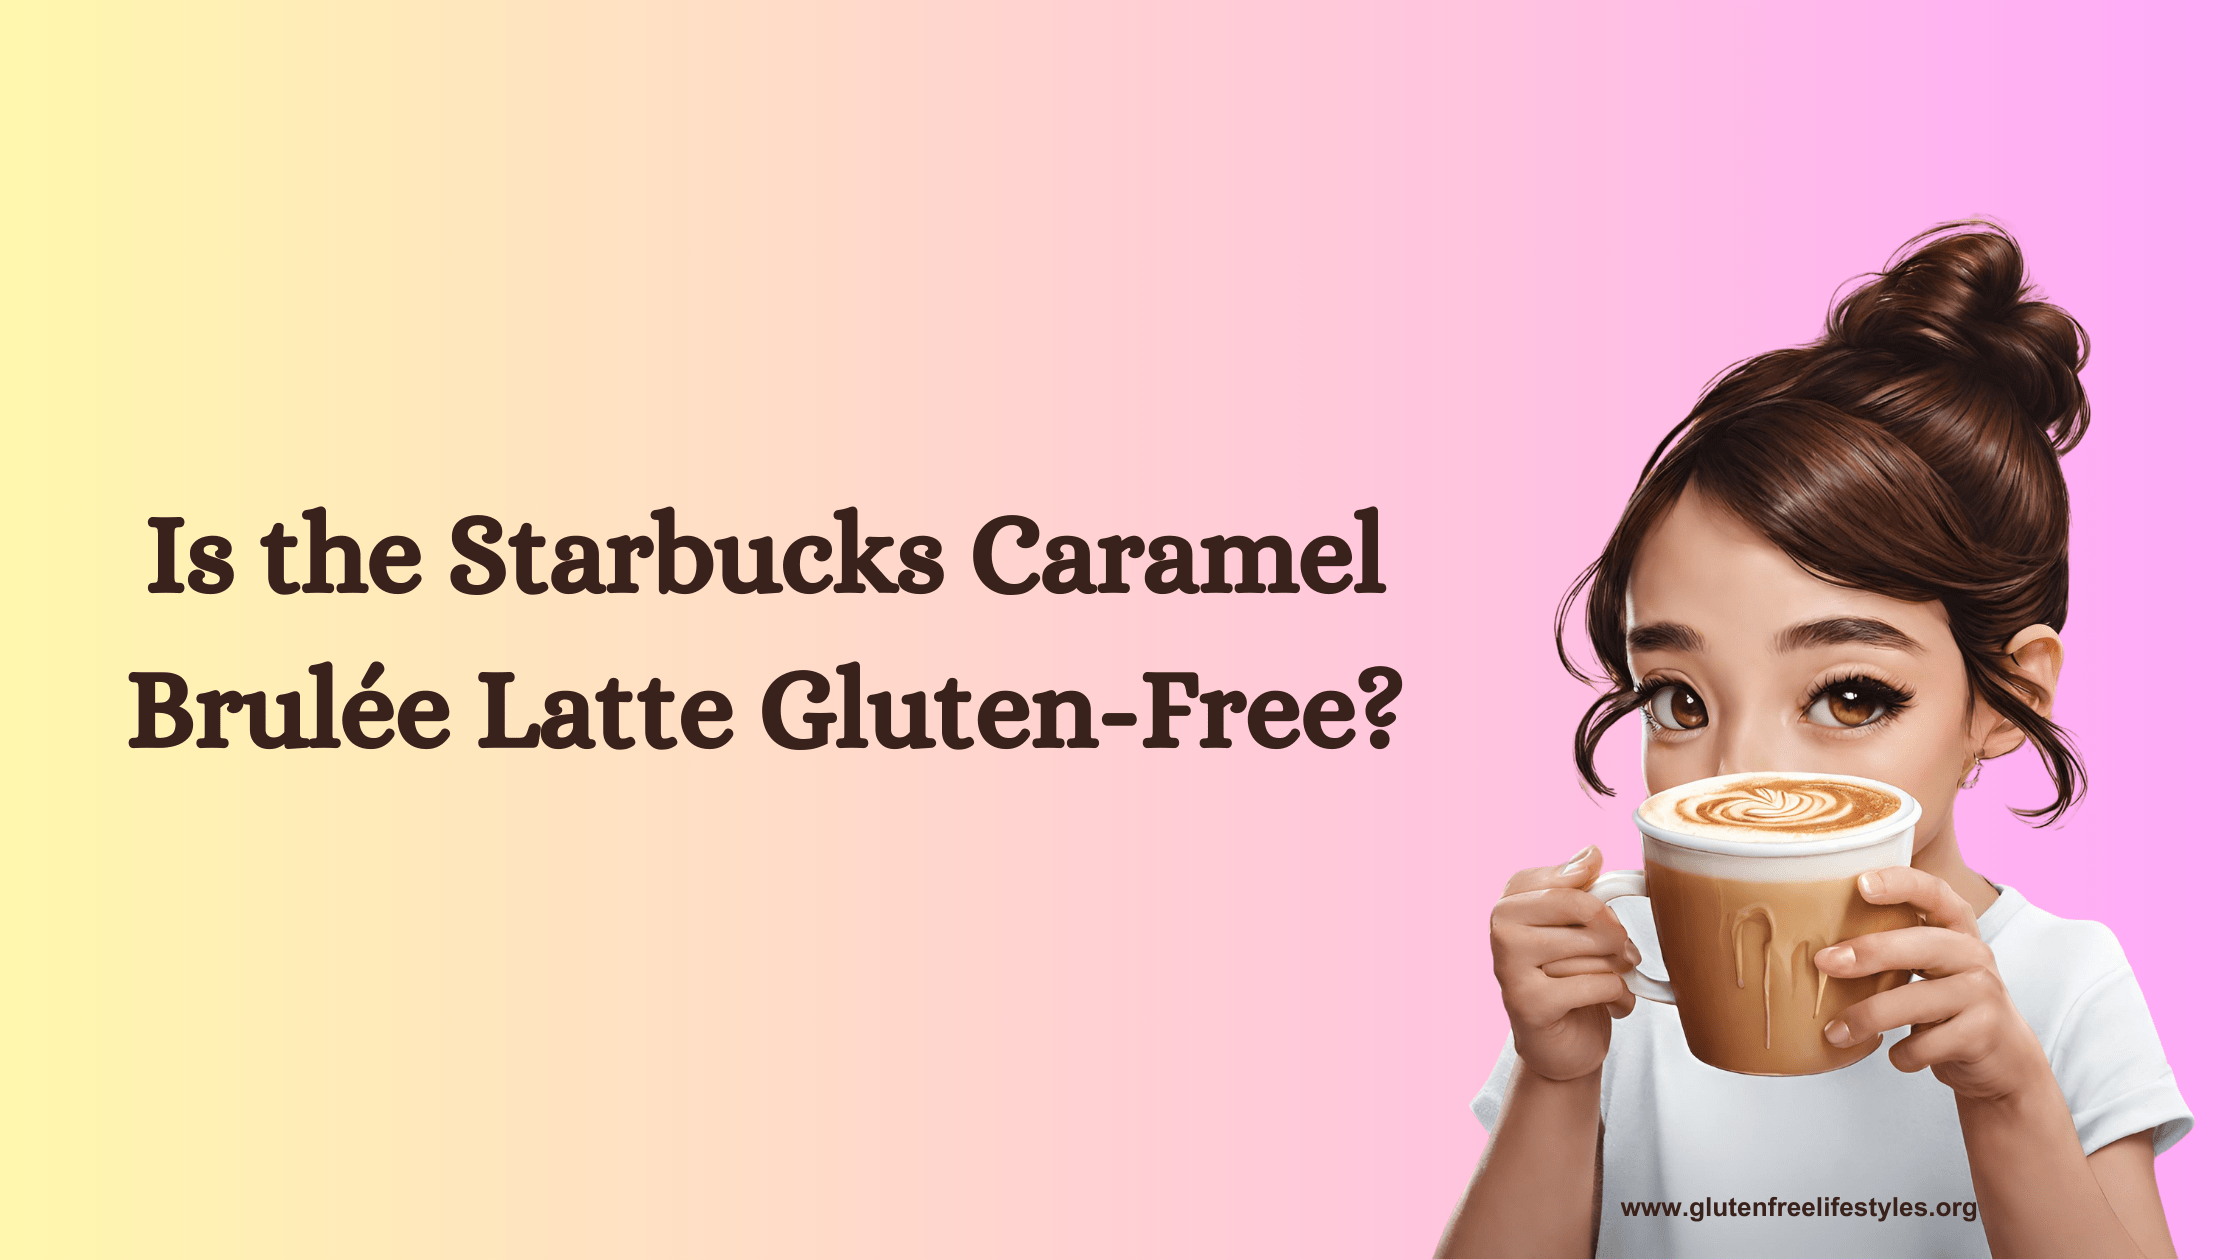 Starbucks Caramel Brulée Latte Gluten-Free